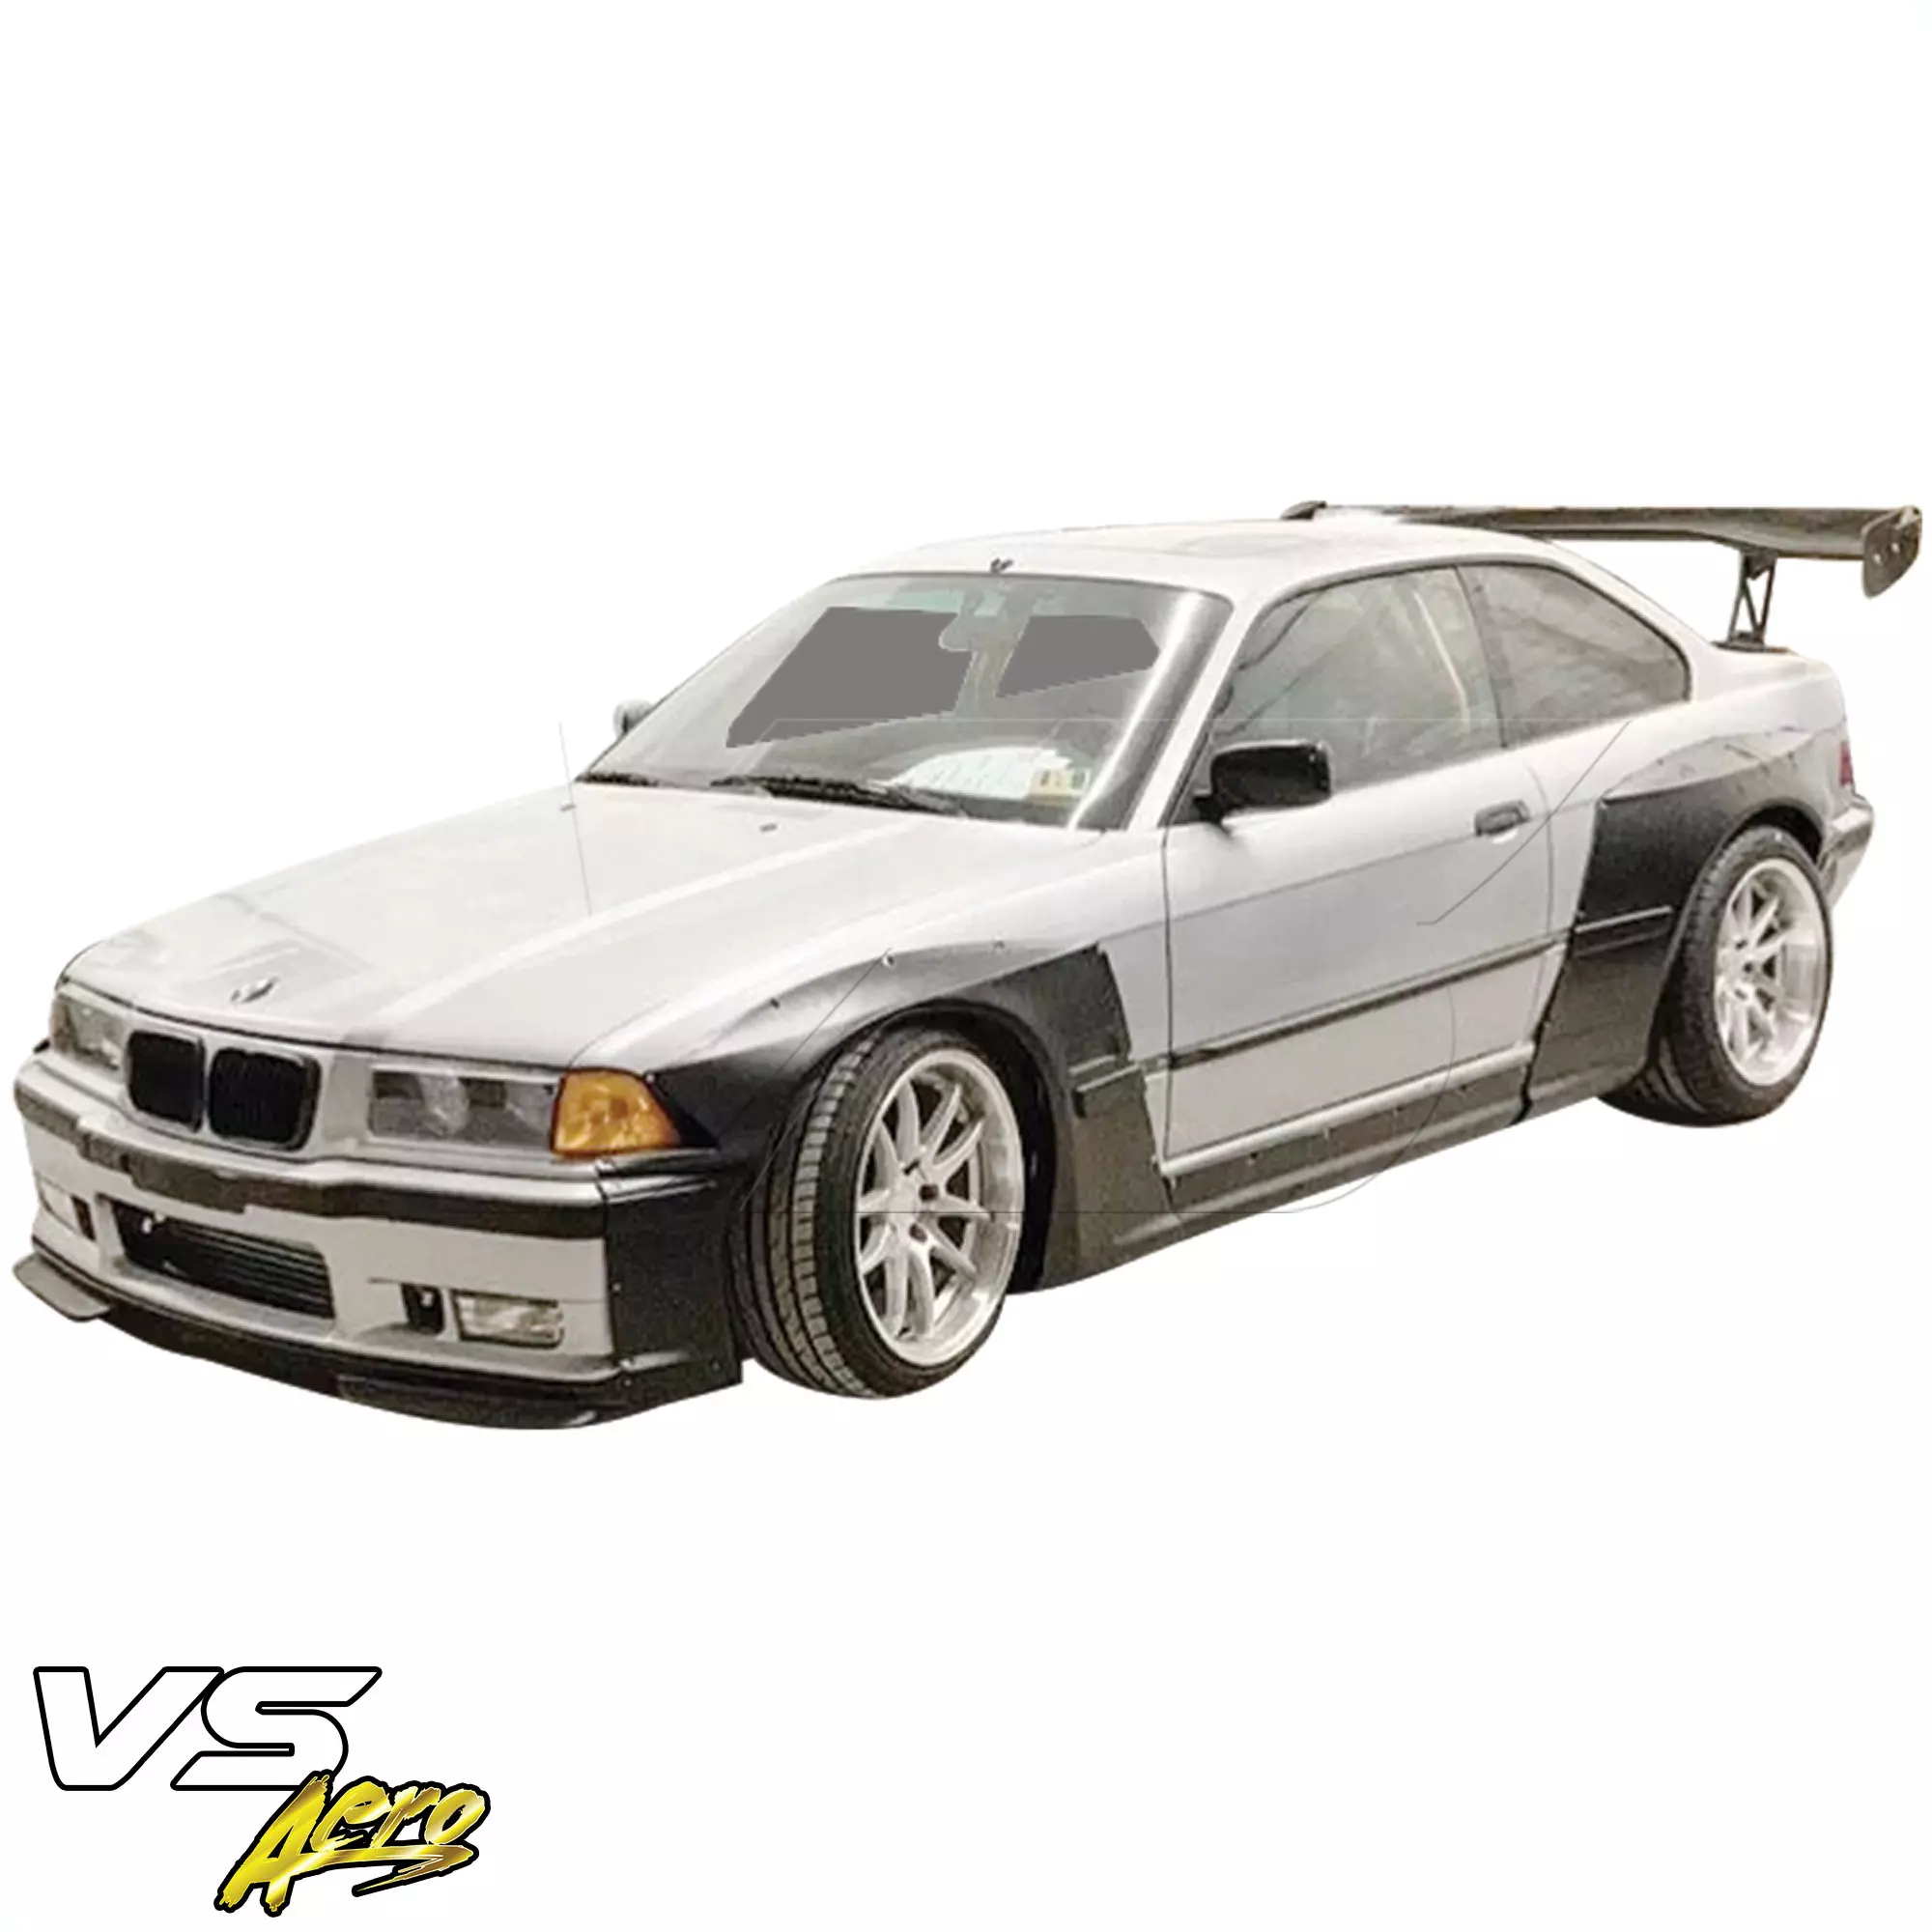 VSaero FRP TKYO Wide Body Kit 11pc > BMW 3-Series 325i 328i E36 1992-1998 > 2dr Coupe - Image 2